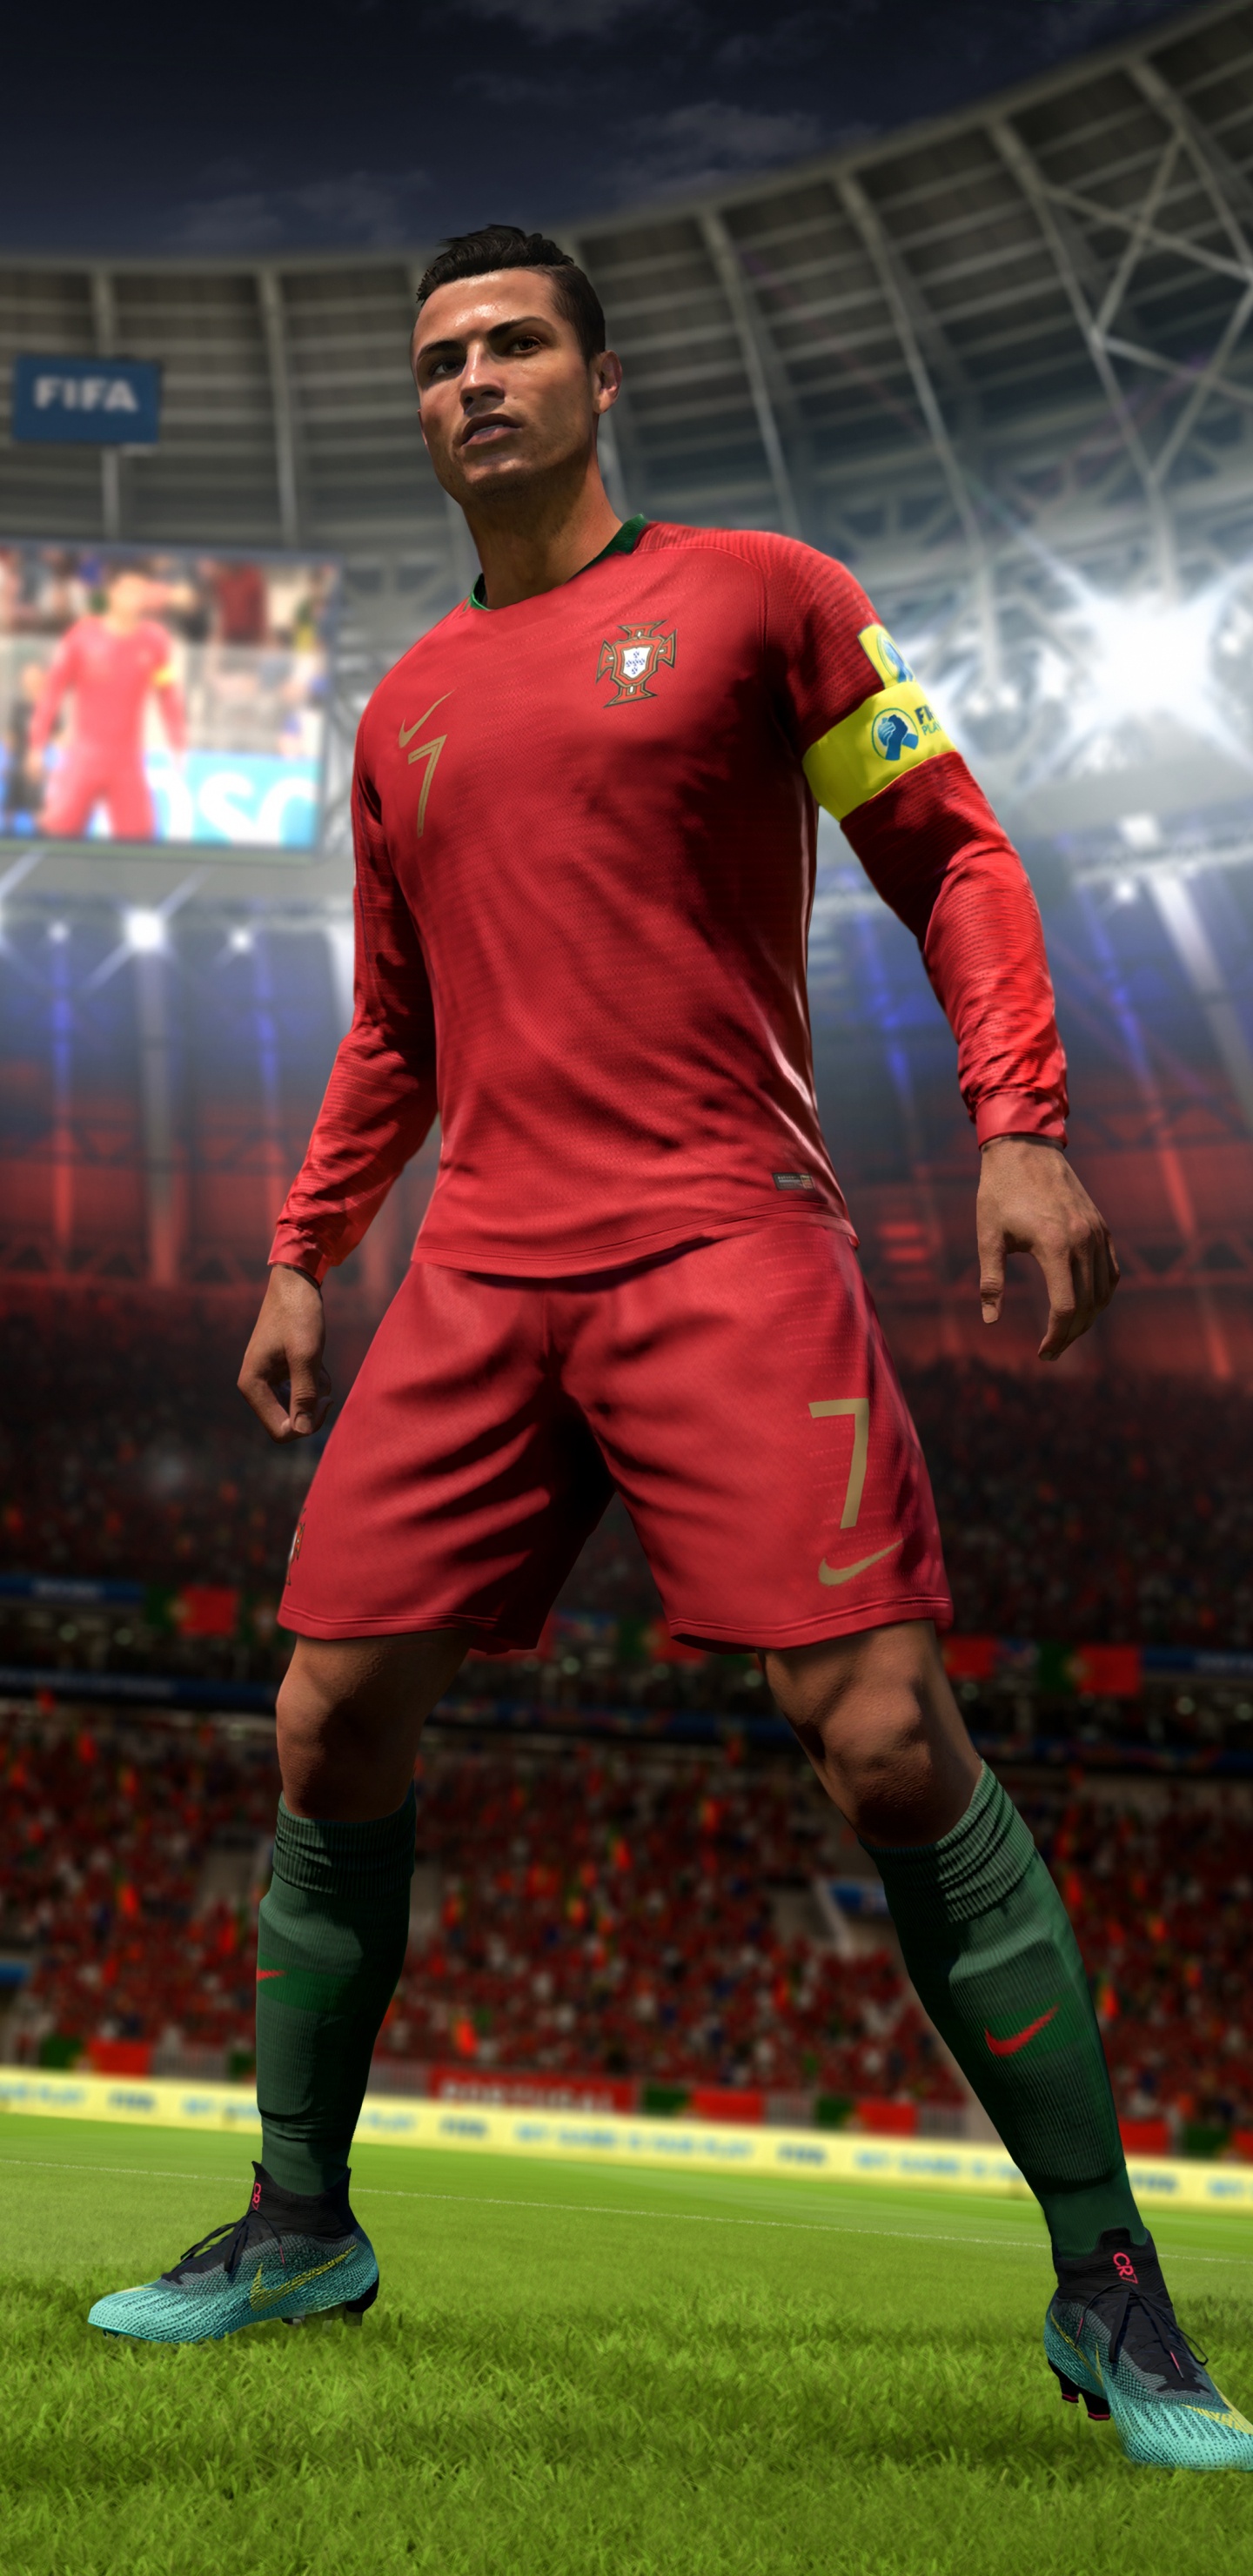 Fifa 18, La Copa Del Mundo de 2018, ea Sports, Electronic Arts, Playstation 4. Wallpaper in 1440x2960 Resolution